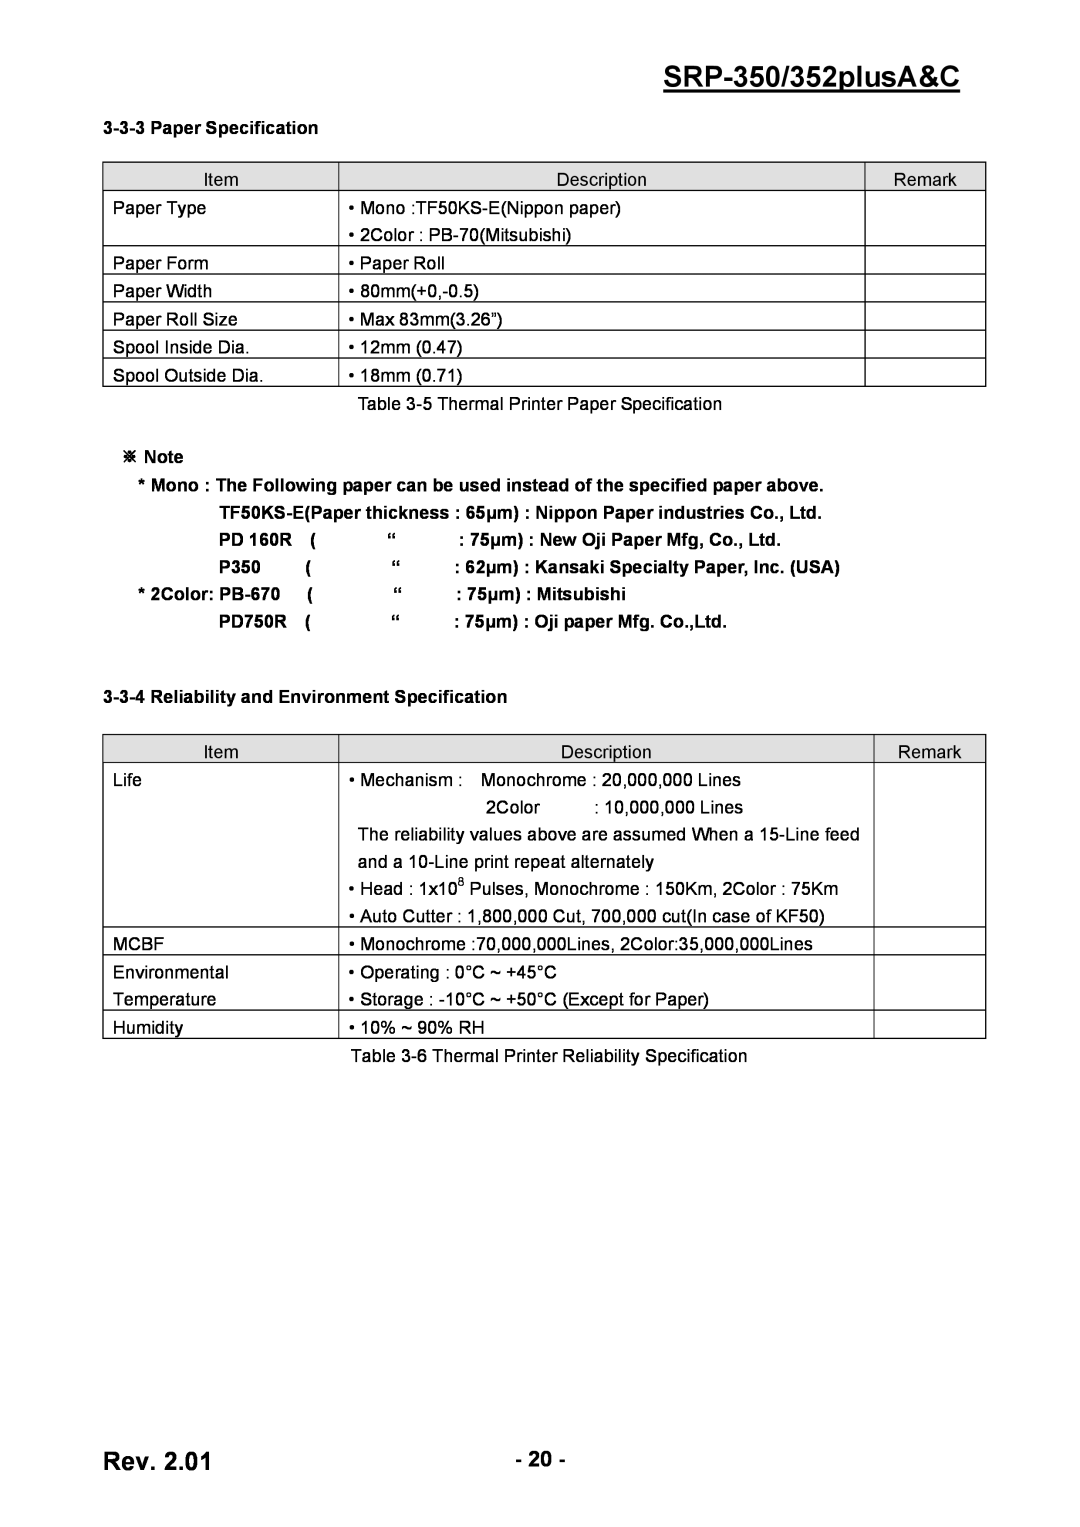 BIXOLON SRP-350/352plusA&C, Paper Specification, ※ Note, PD 160R, P350, 62μm Kansaki Specialty Paper, Inc. USA, PD750R 